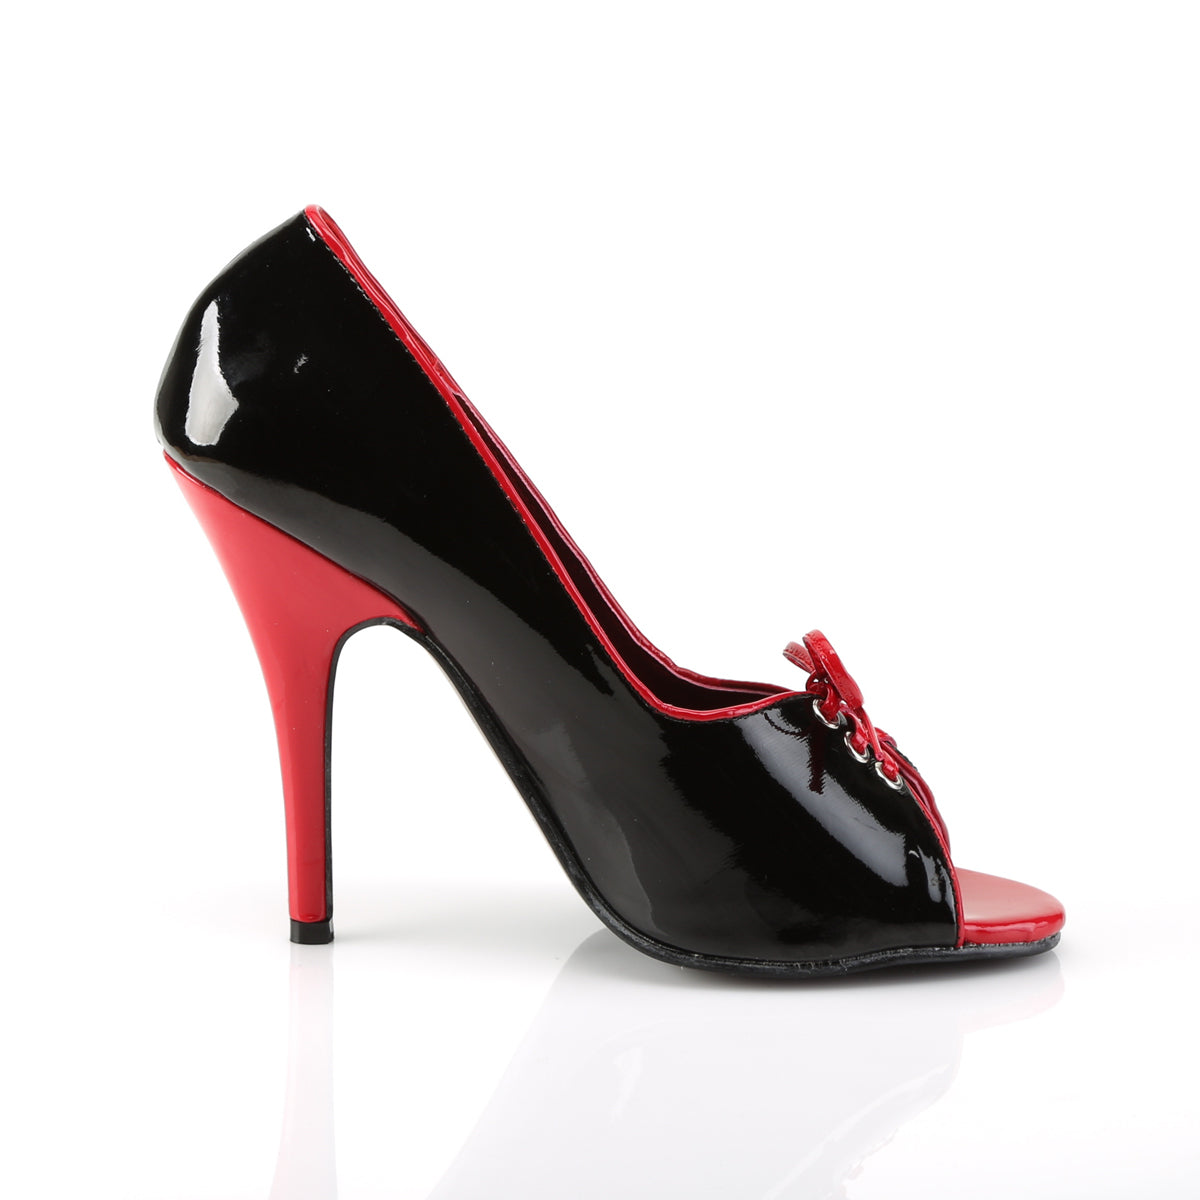 SEDUCE-216 Pleaser 5 Inch Heel Black and Red Fetish Footwear-Pleaser- Sexy Shoes Fetish Heels